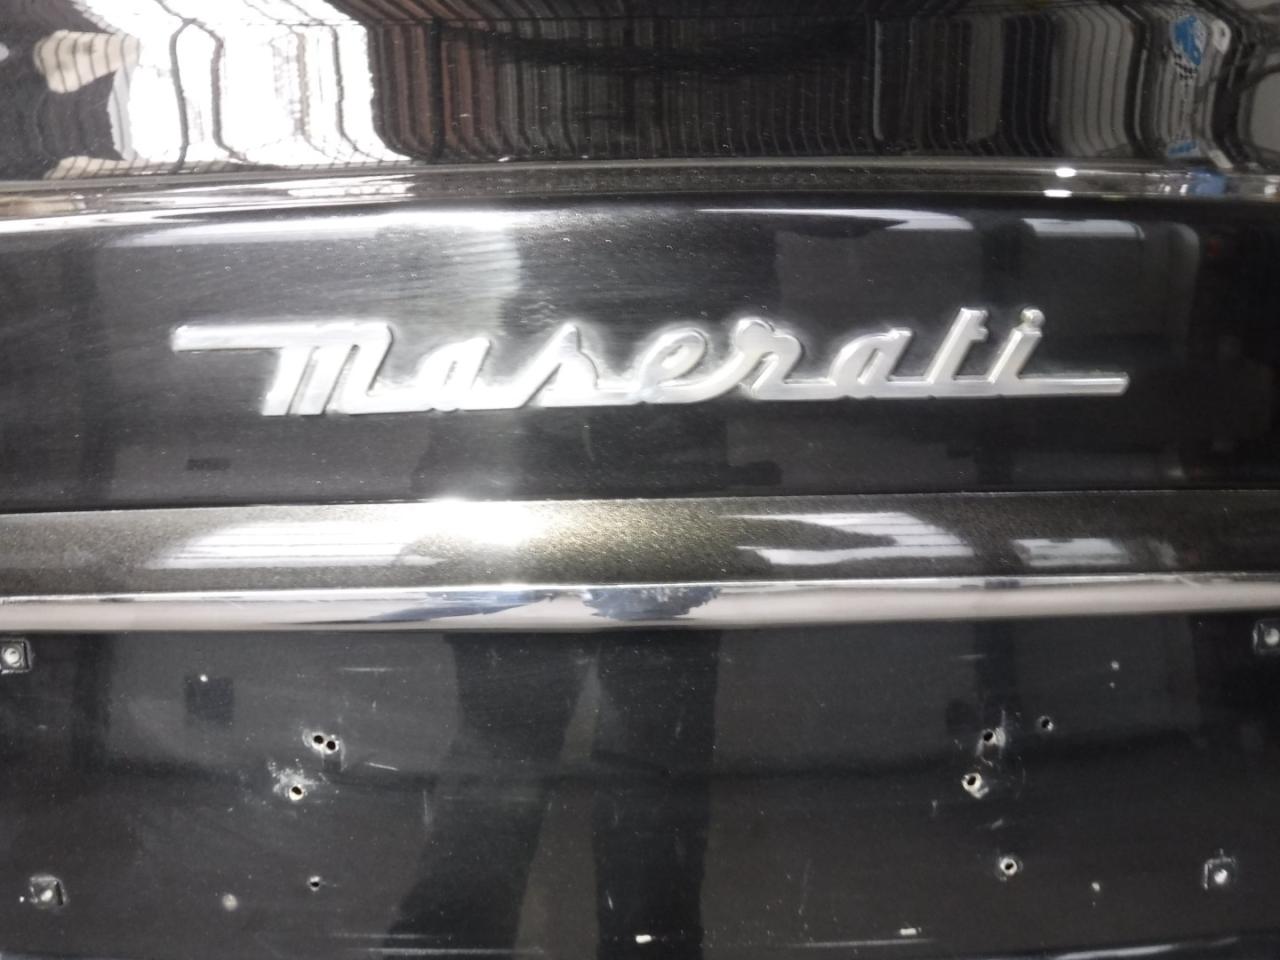 1998 Maserati 3200GT from 1998